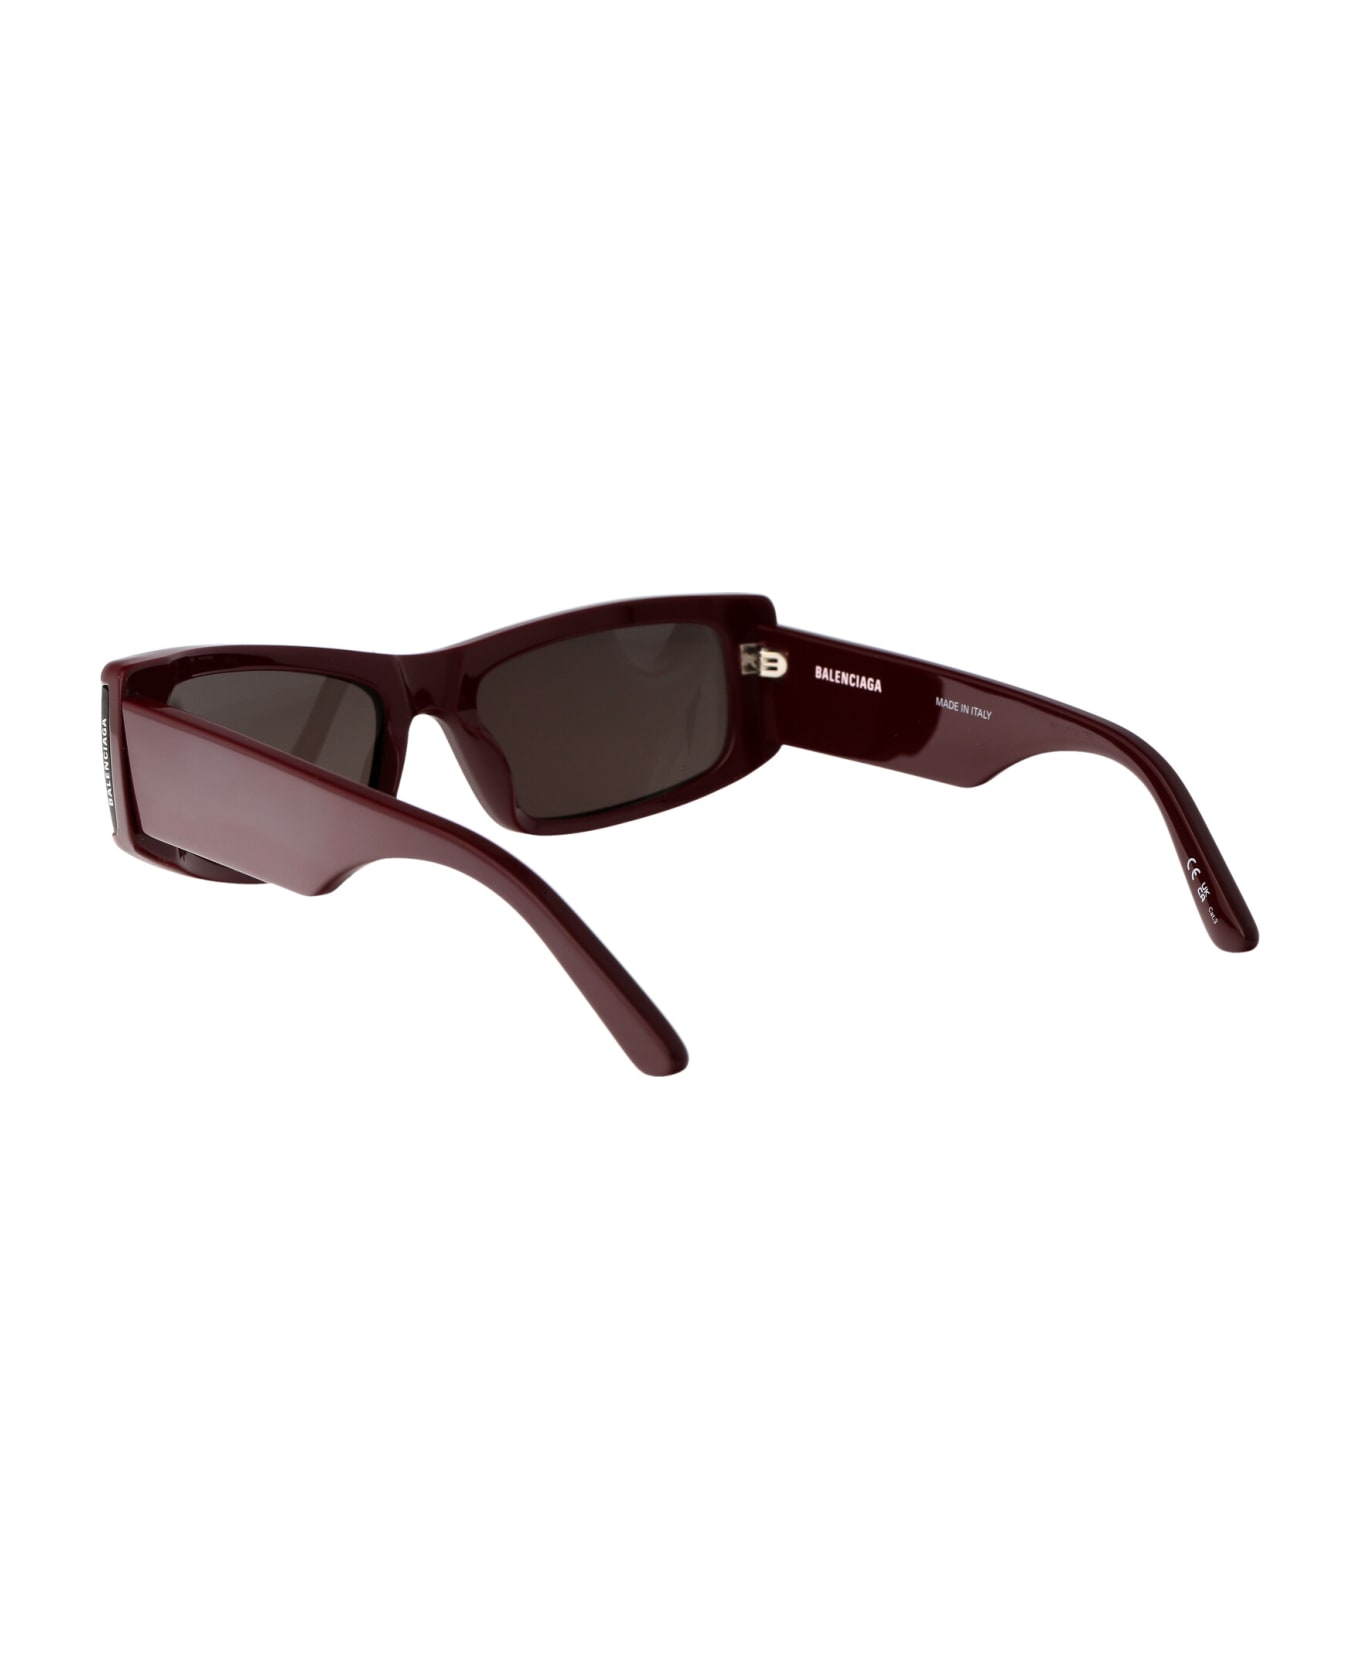 Balenciaga Eyewear Bb0301s Sunglasses - 004 BURGUNDY BURGUNDY GREY